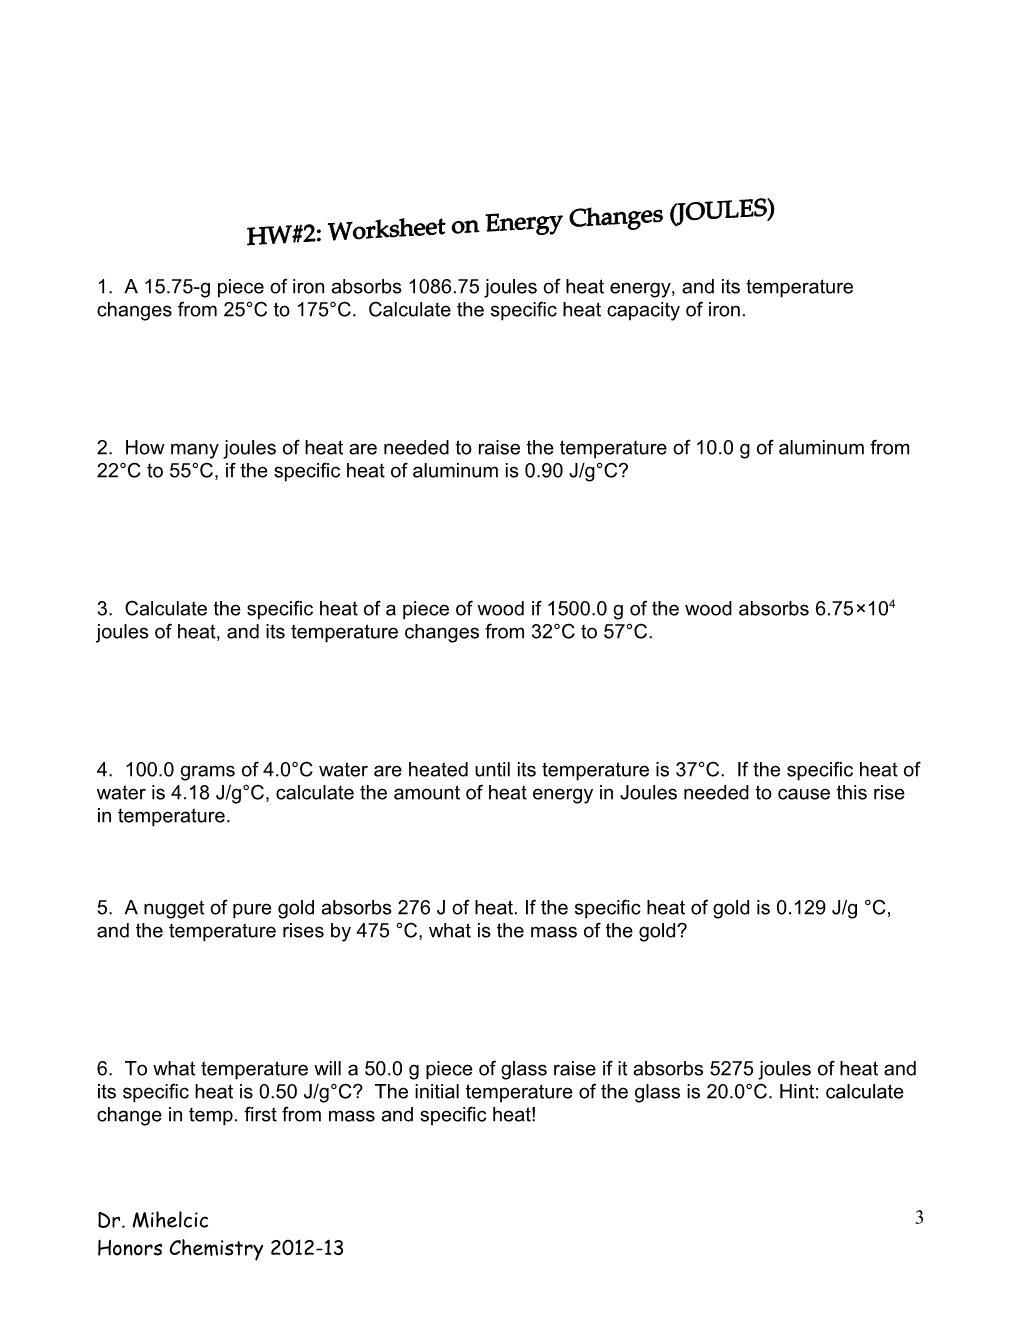 Homework #1: Energy Conversions s1